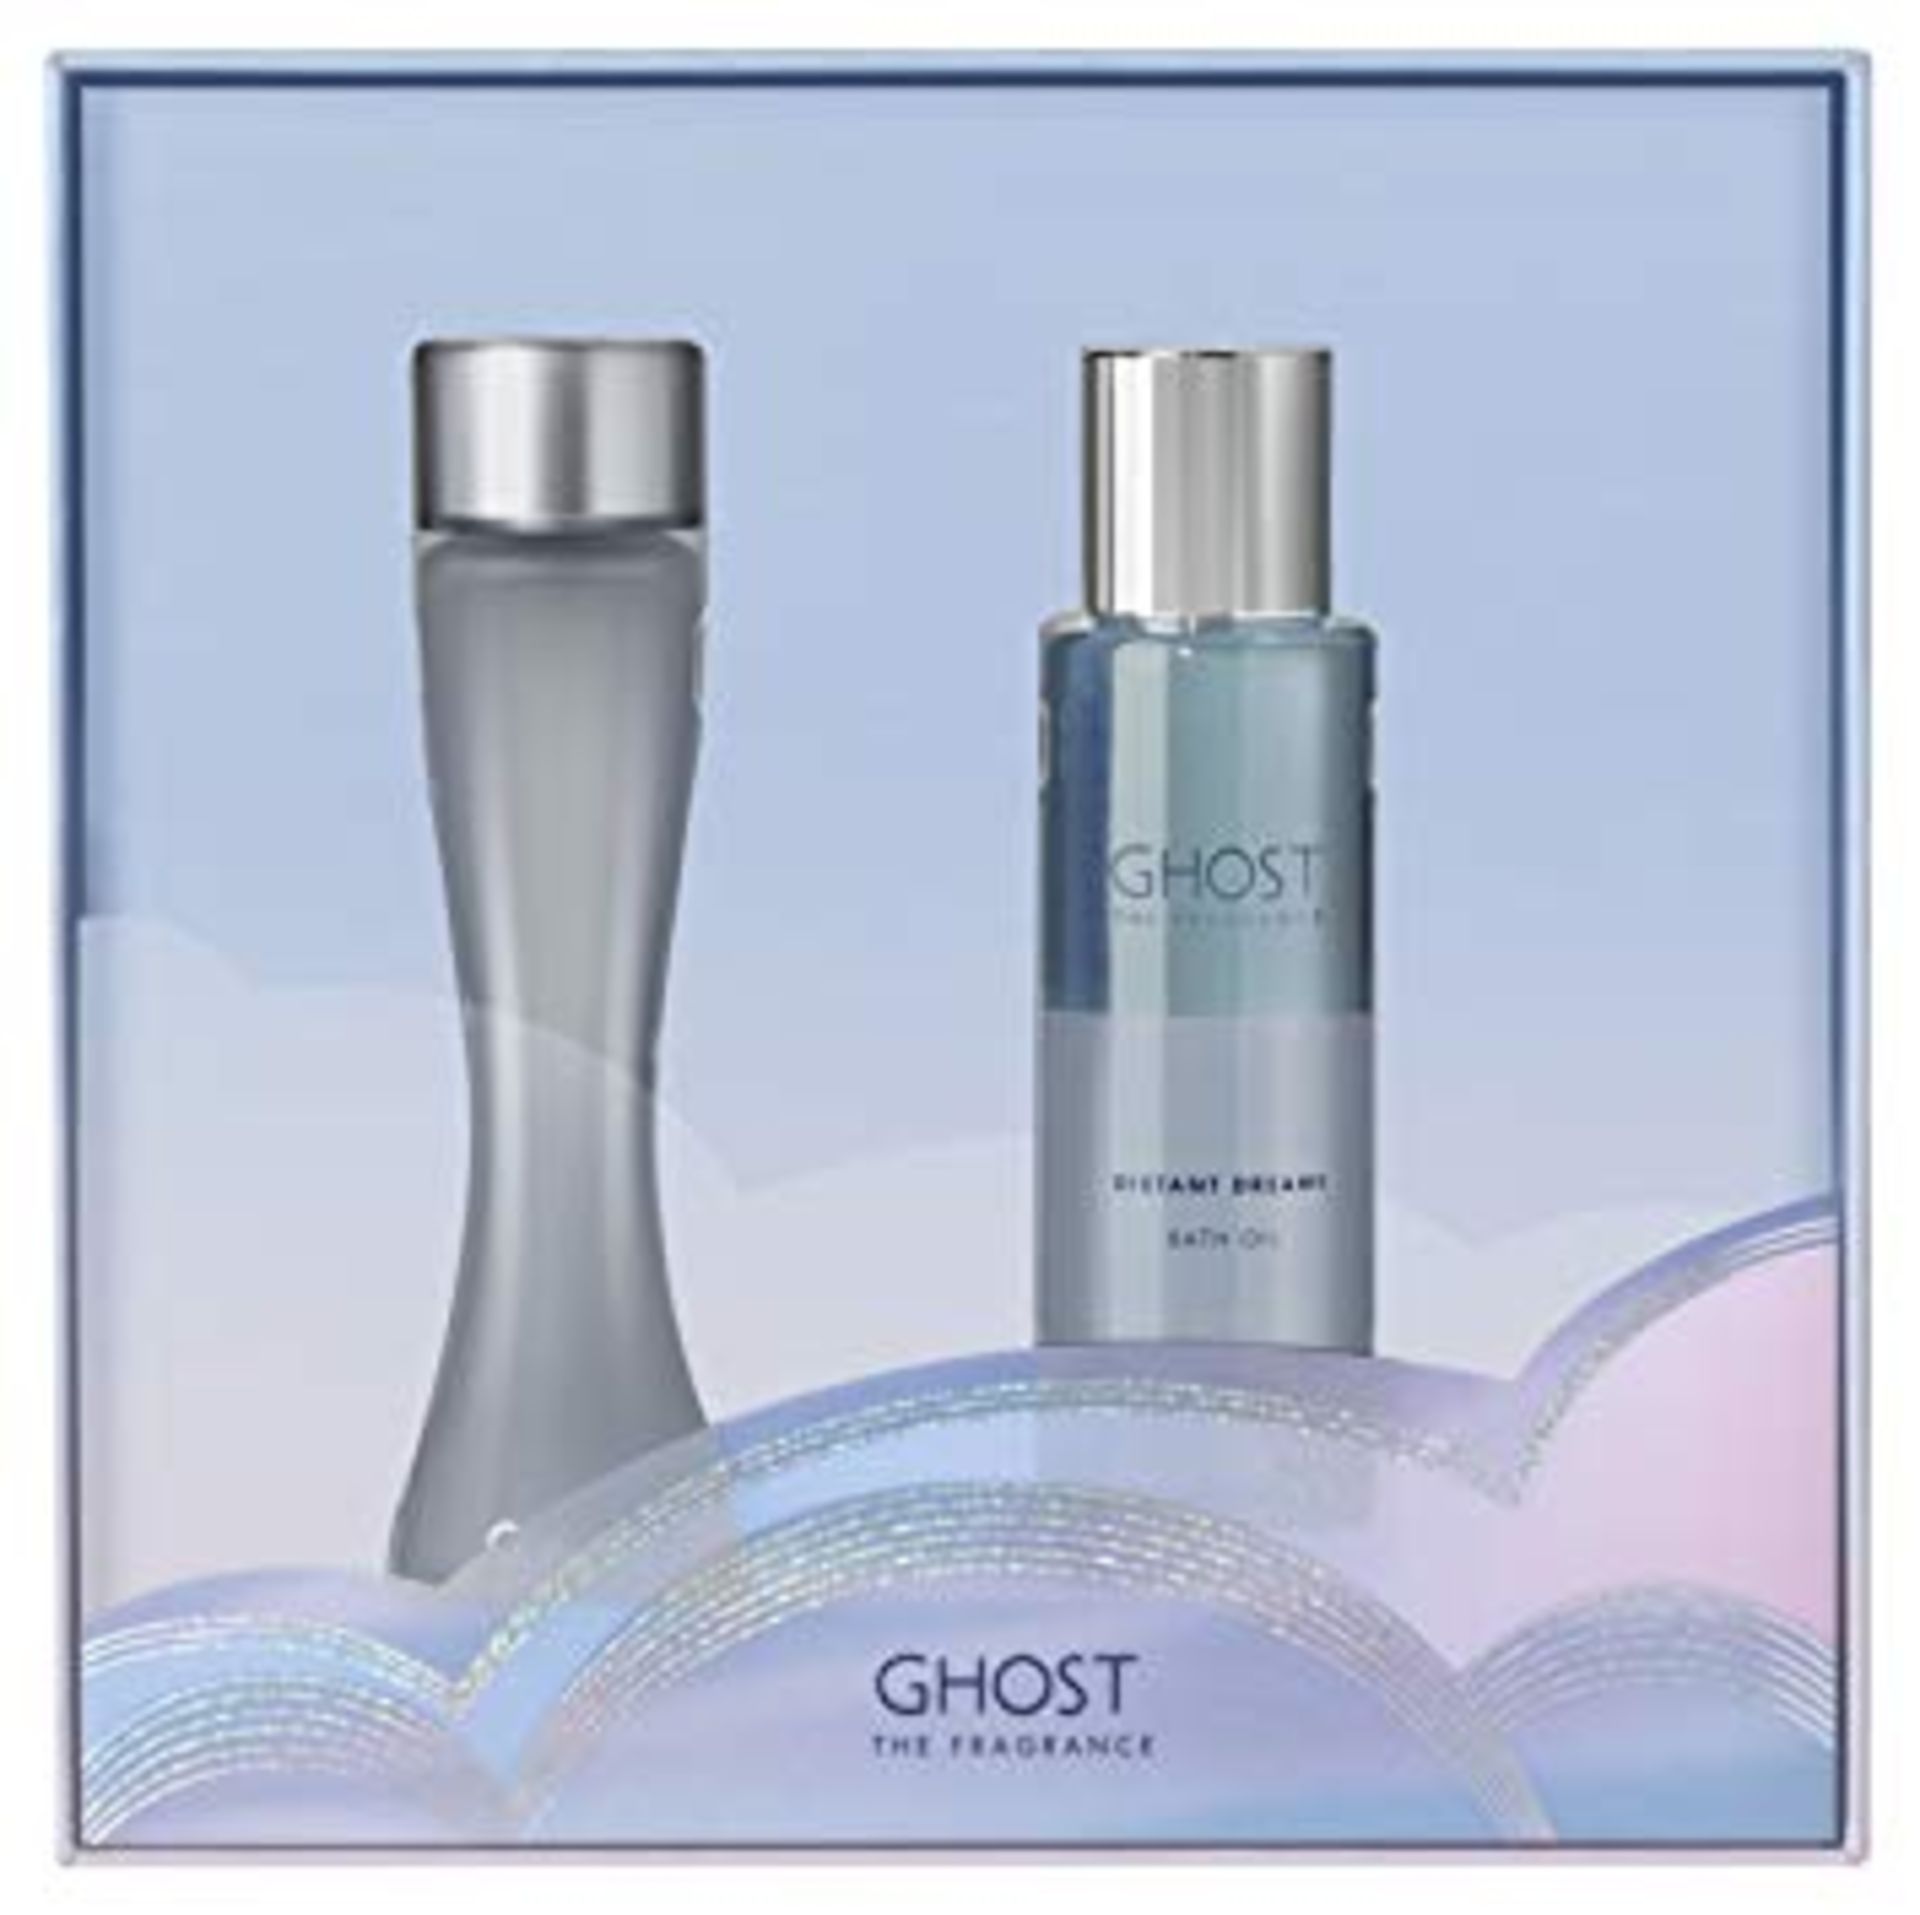 V Brand New Ghost The Fragrance Gift Set For Her - 30ml EDT Spray And 100ml Body Oil